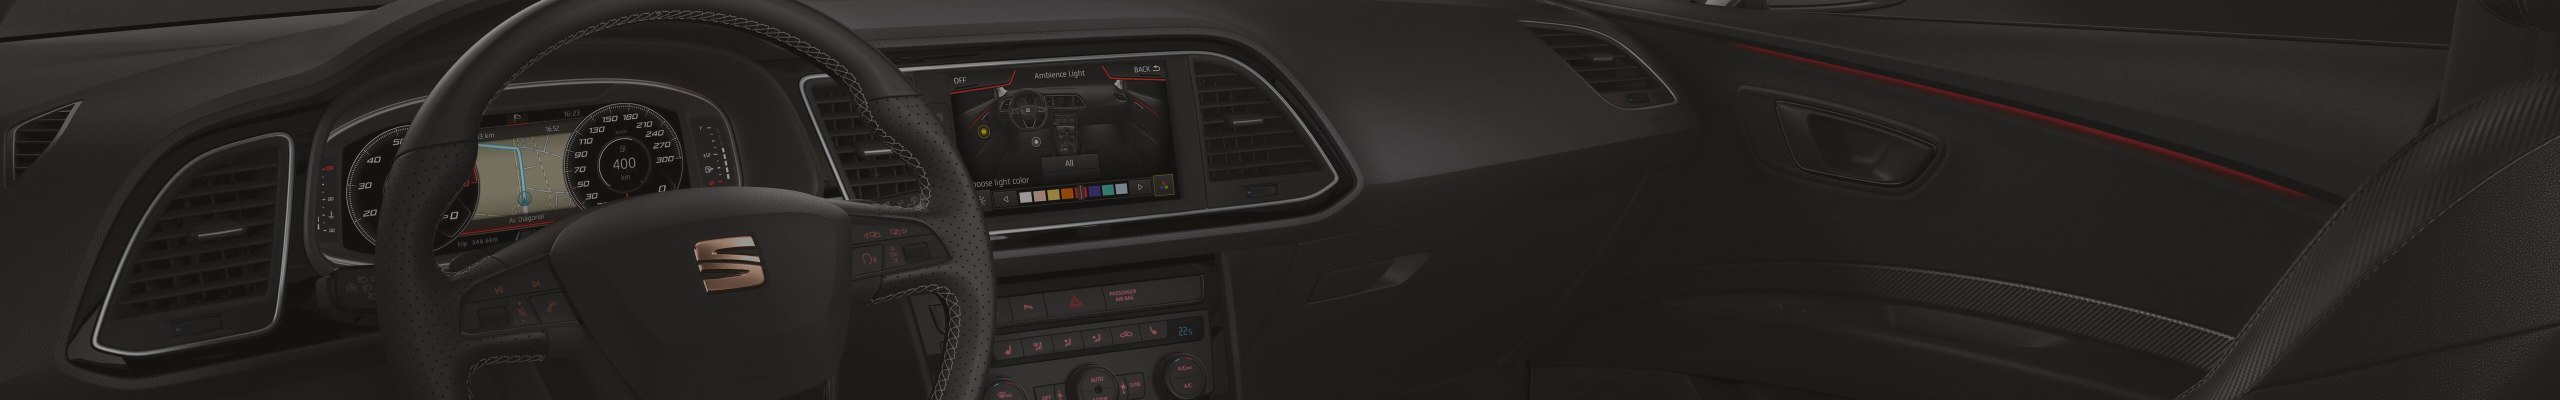 SEAT car digital cockpit interior view